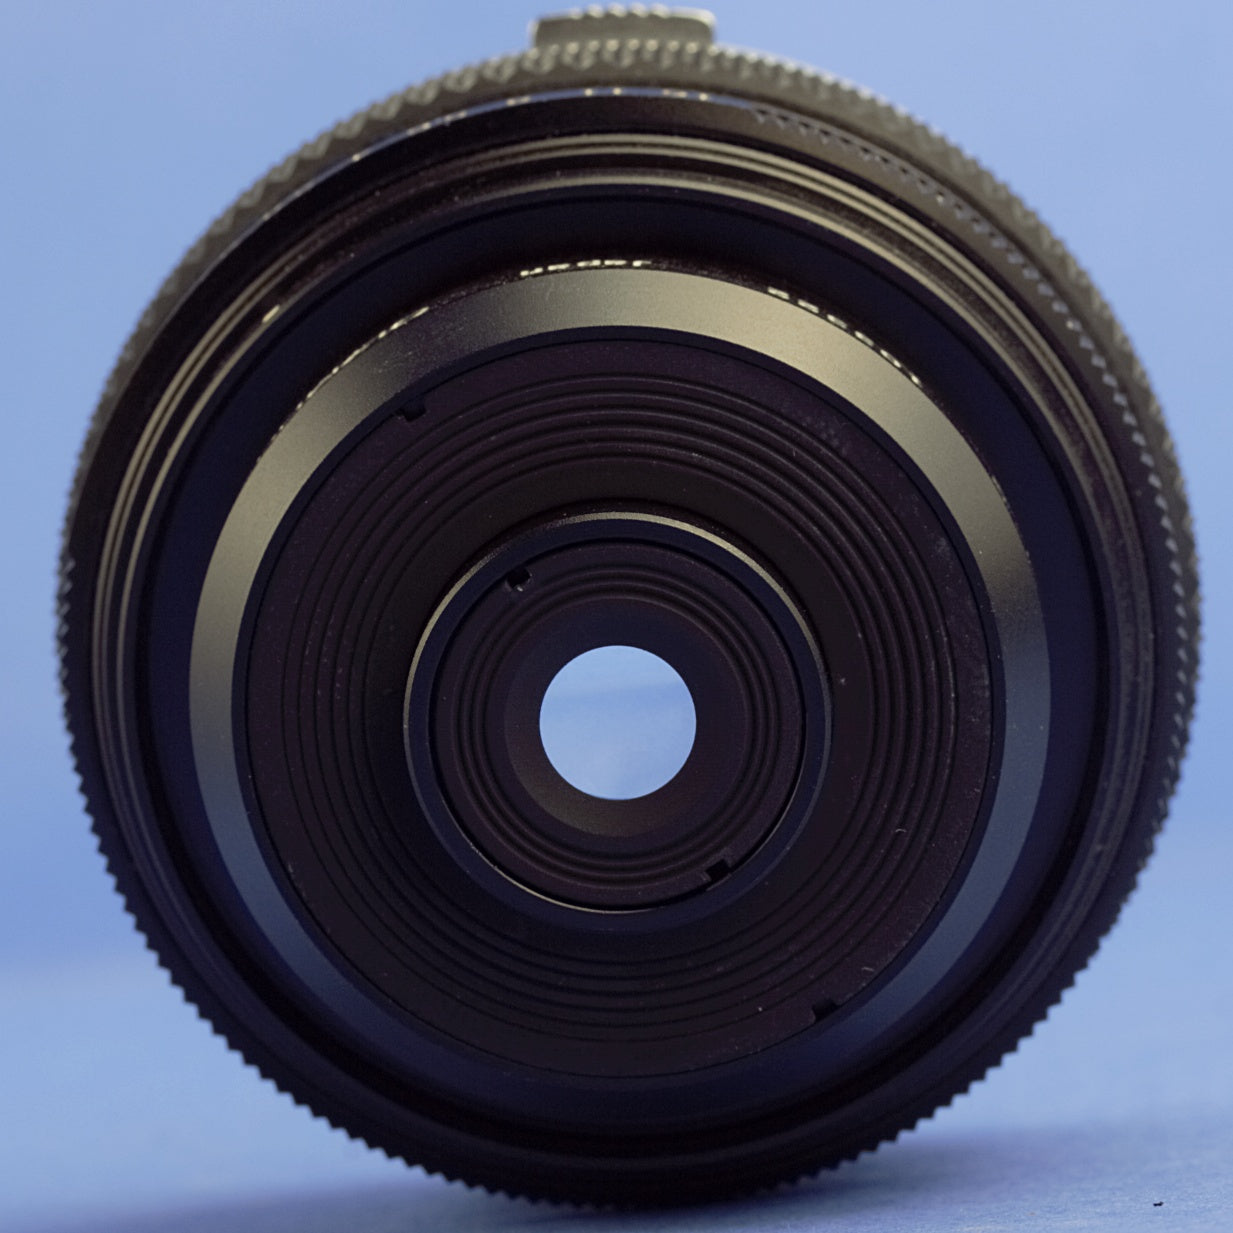 Olympus OM 20mm F2 Auto-Macro Lens Mint Condition